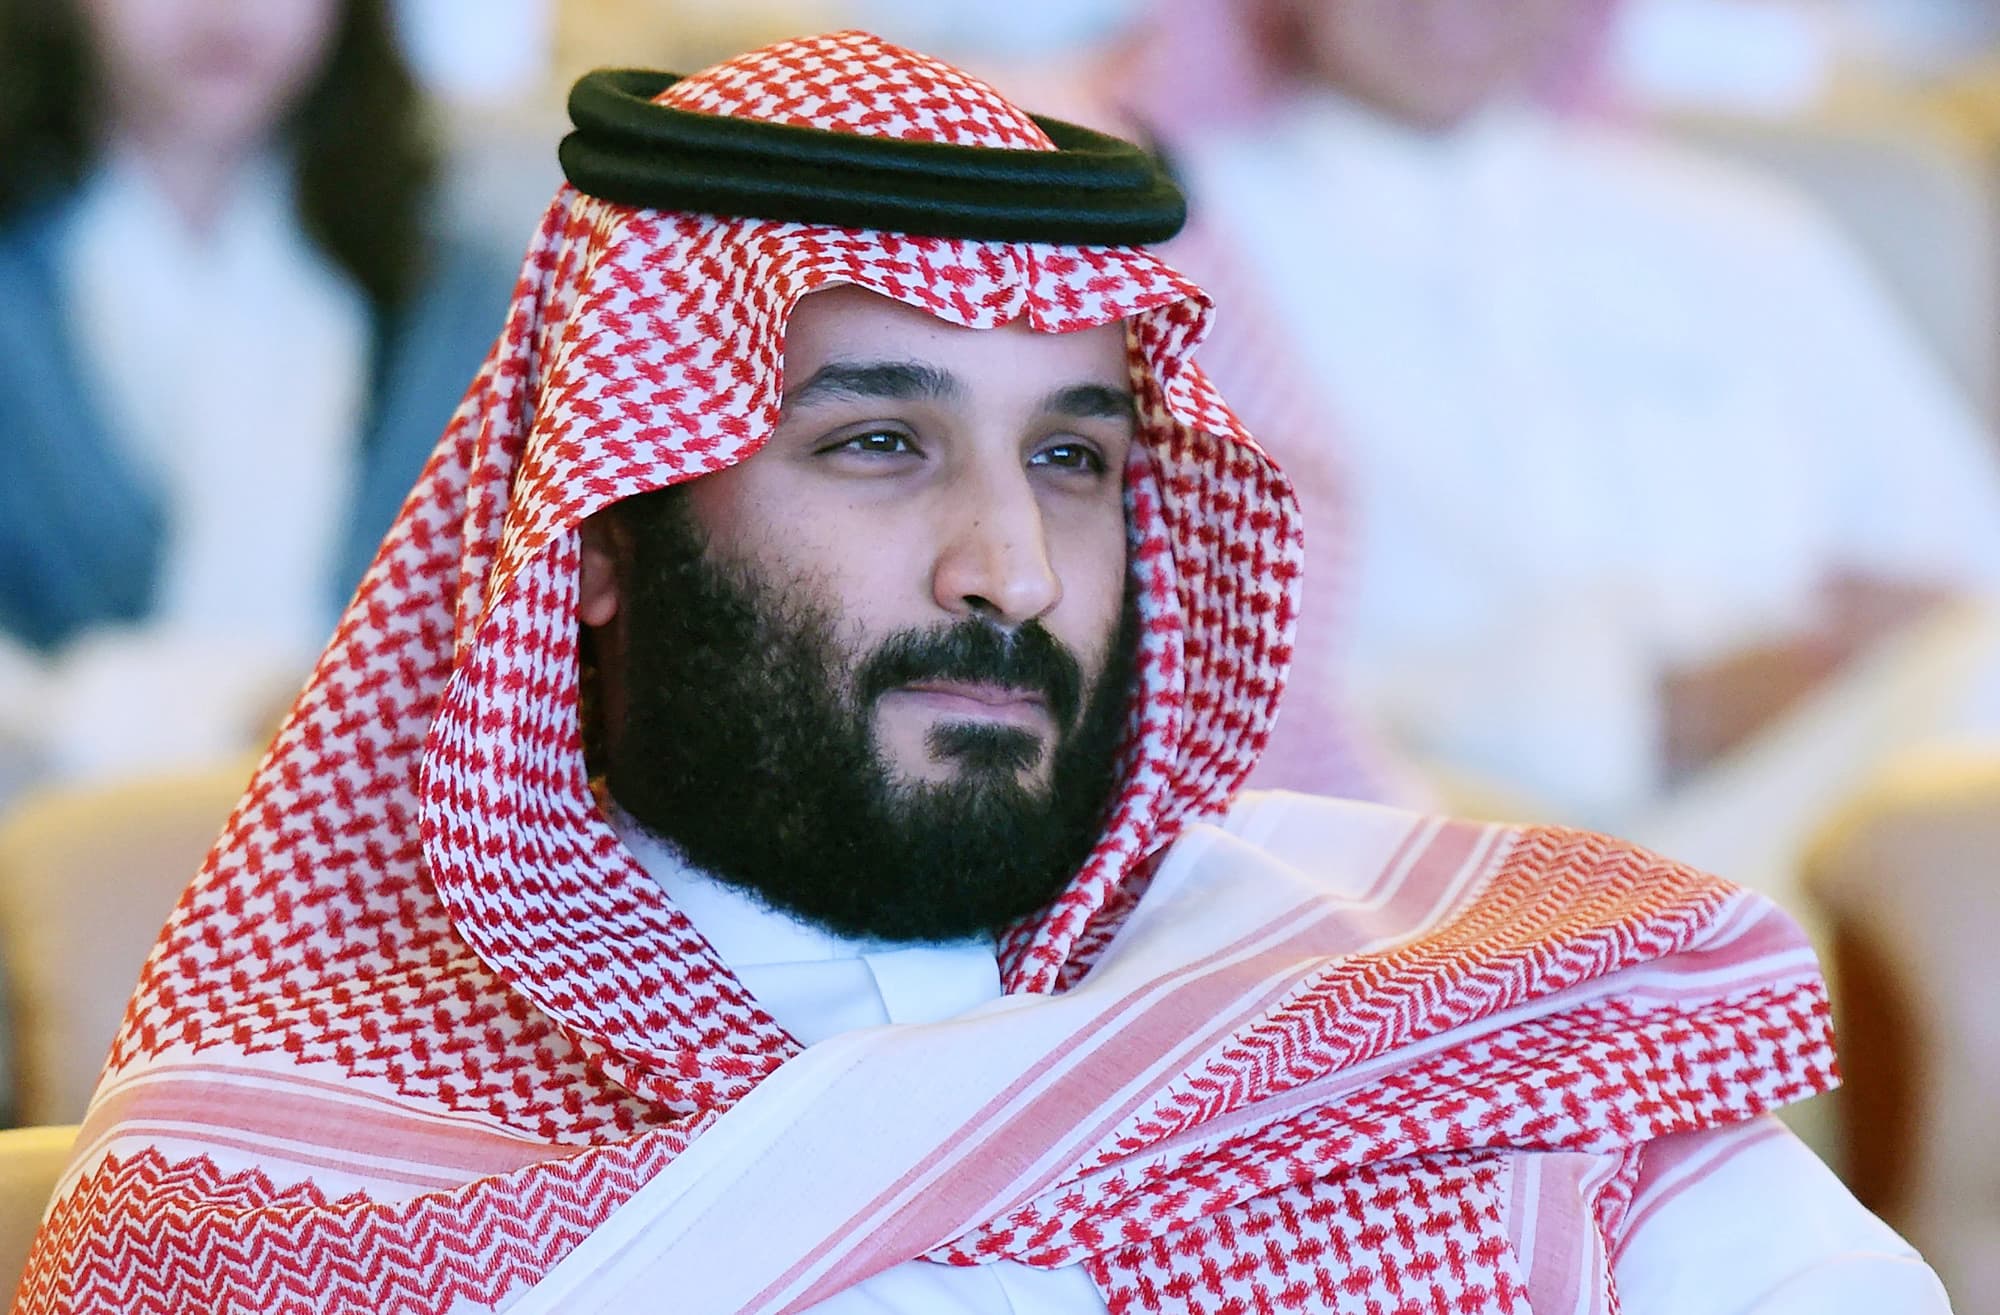 According to US intelligence, the Saudi Crown Prince has approved the murder of Jamal Khashoggi